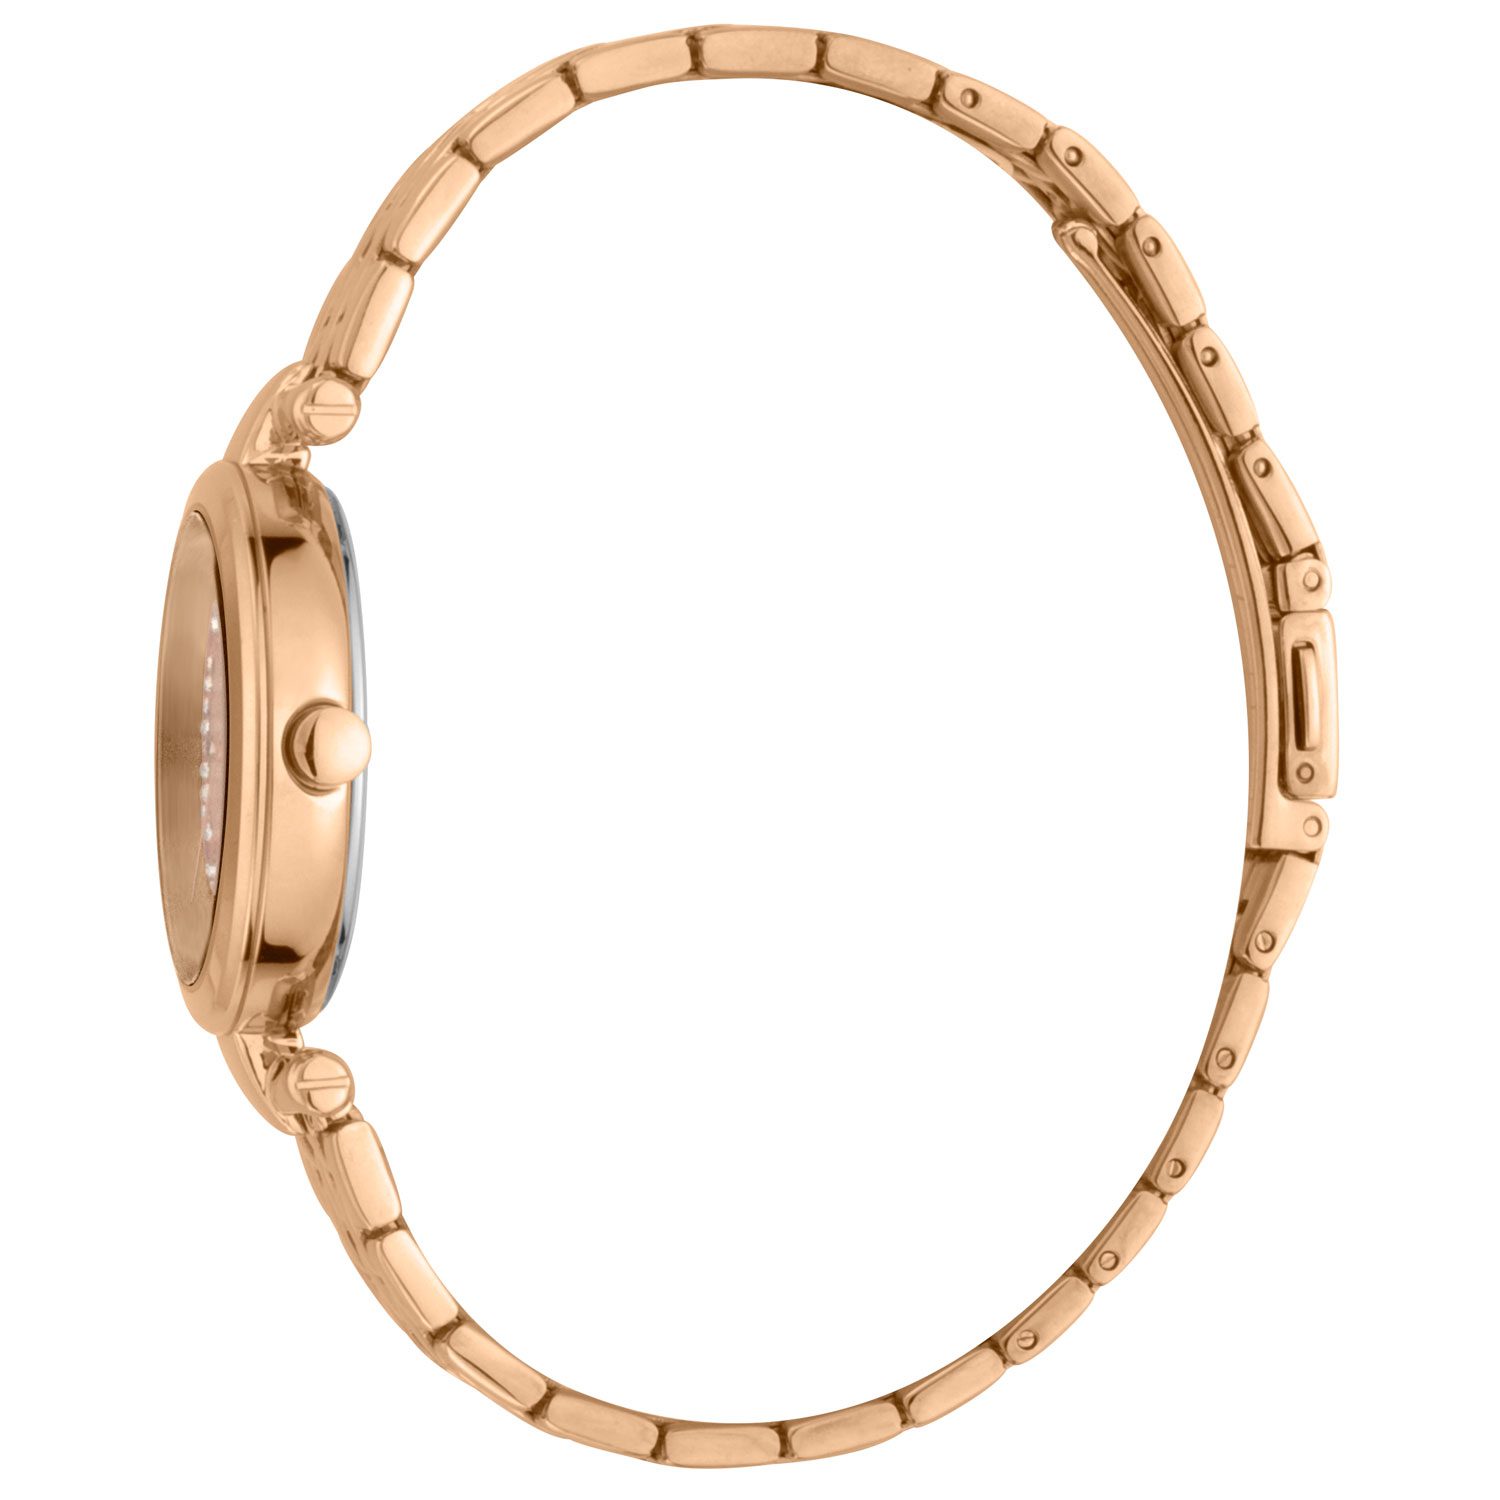 Esprit dames polshorloge ES1L203M0085 - 5ATM - roze goud kleur - vrouwelijke horloge armband